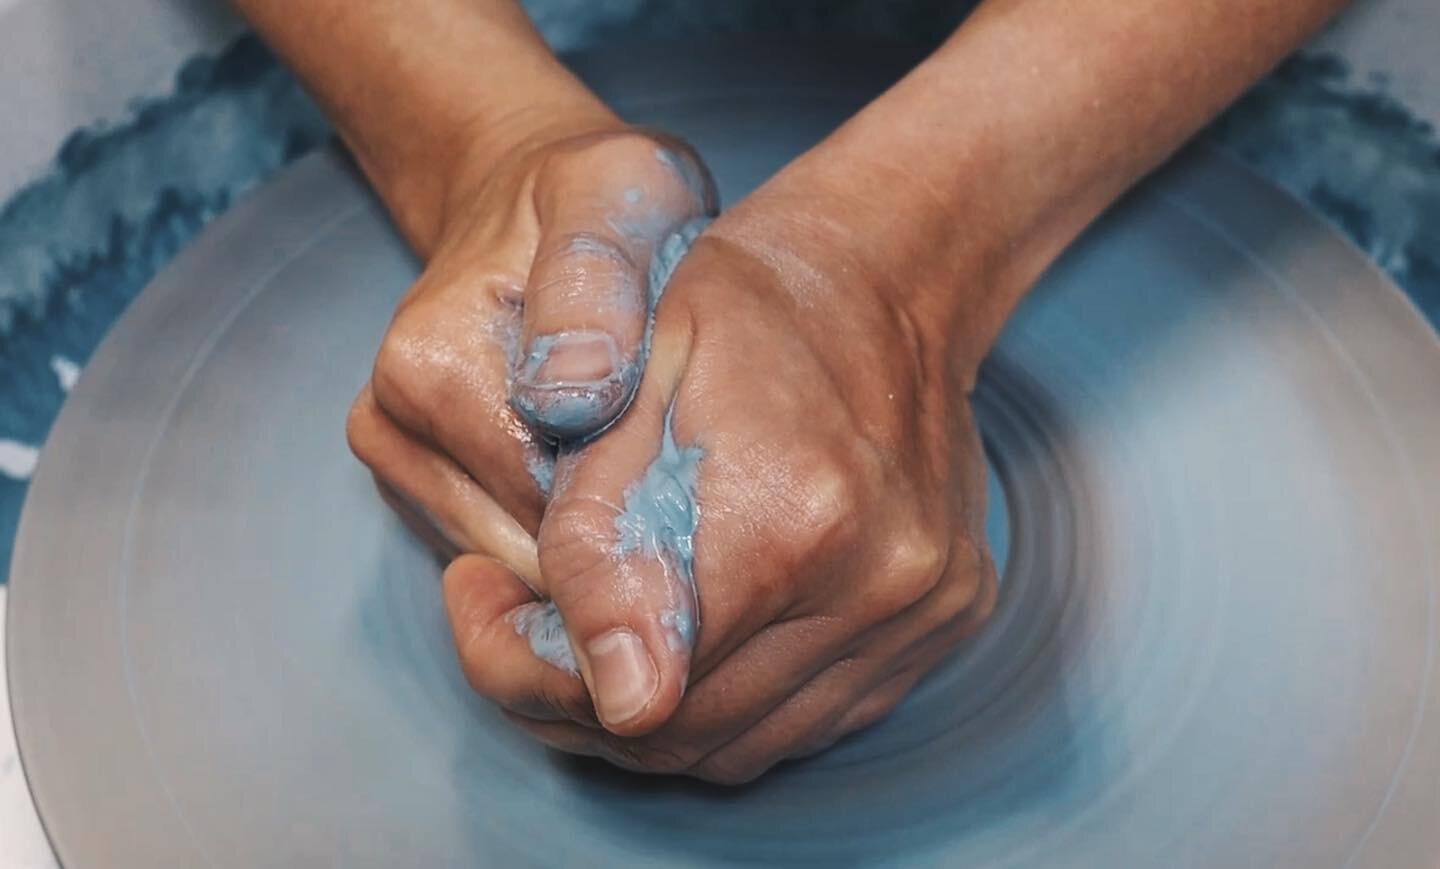 Es kam kein Schlumpf zu Schaden 🔵
#blueporcelain #centeringclay 

#keramik #pottery #pottersofinstagram #modernceramics #ceramics #notonkeramik #tablewaredesign #makersgonnamake #design #minimalism #modernekeramik #ceramicart #ceramicdesign #hygge #